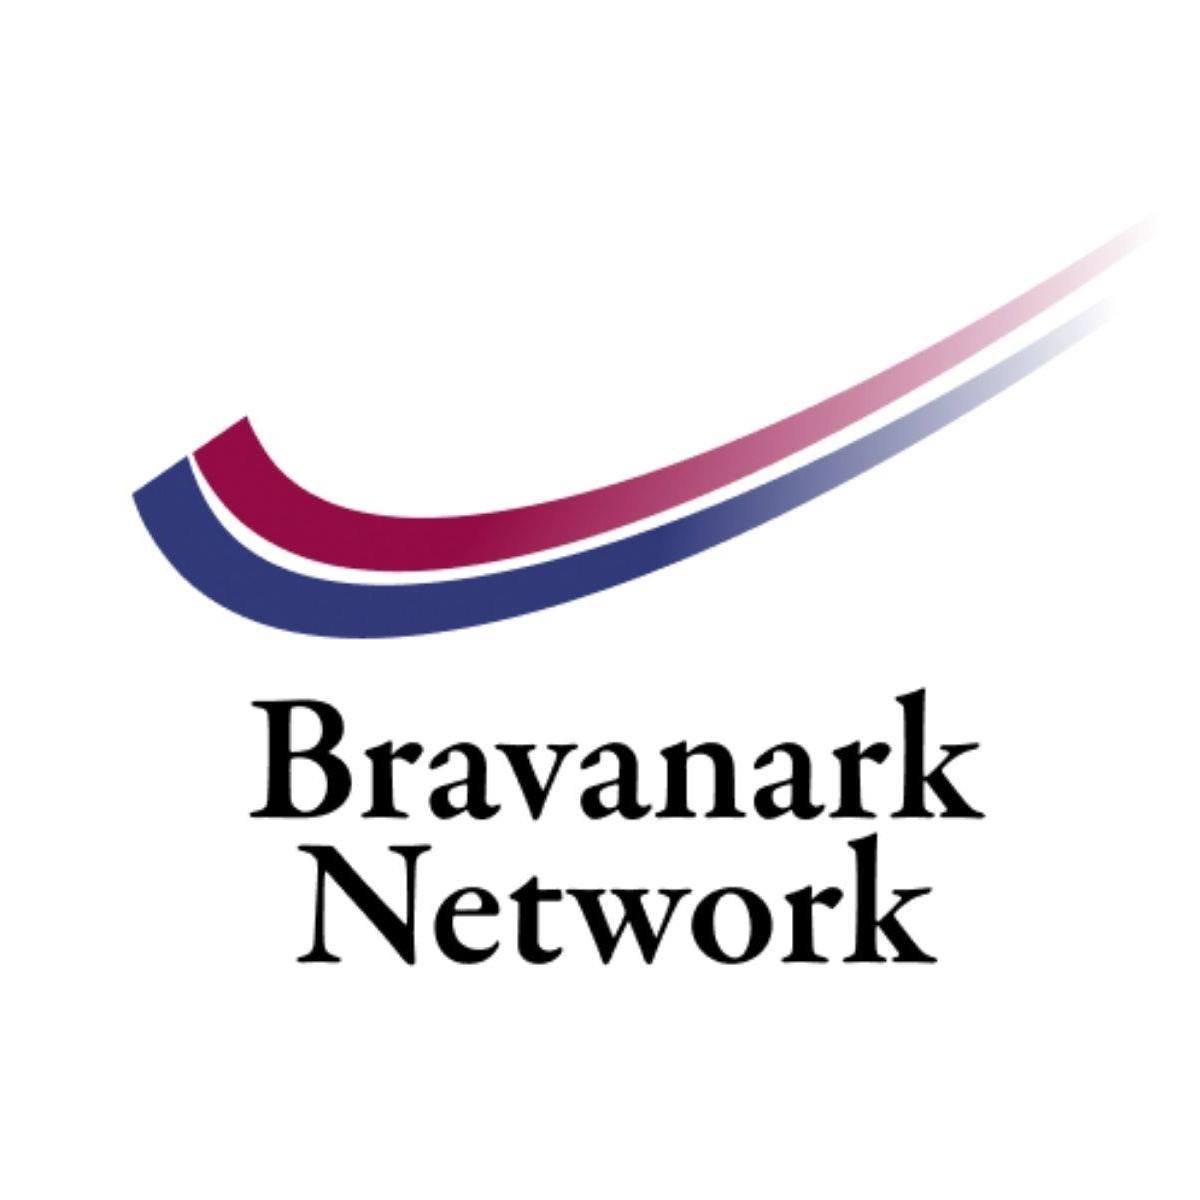 BravanarkNetwork logo